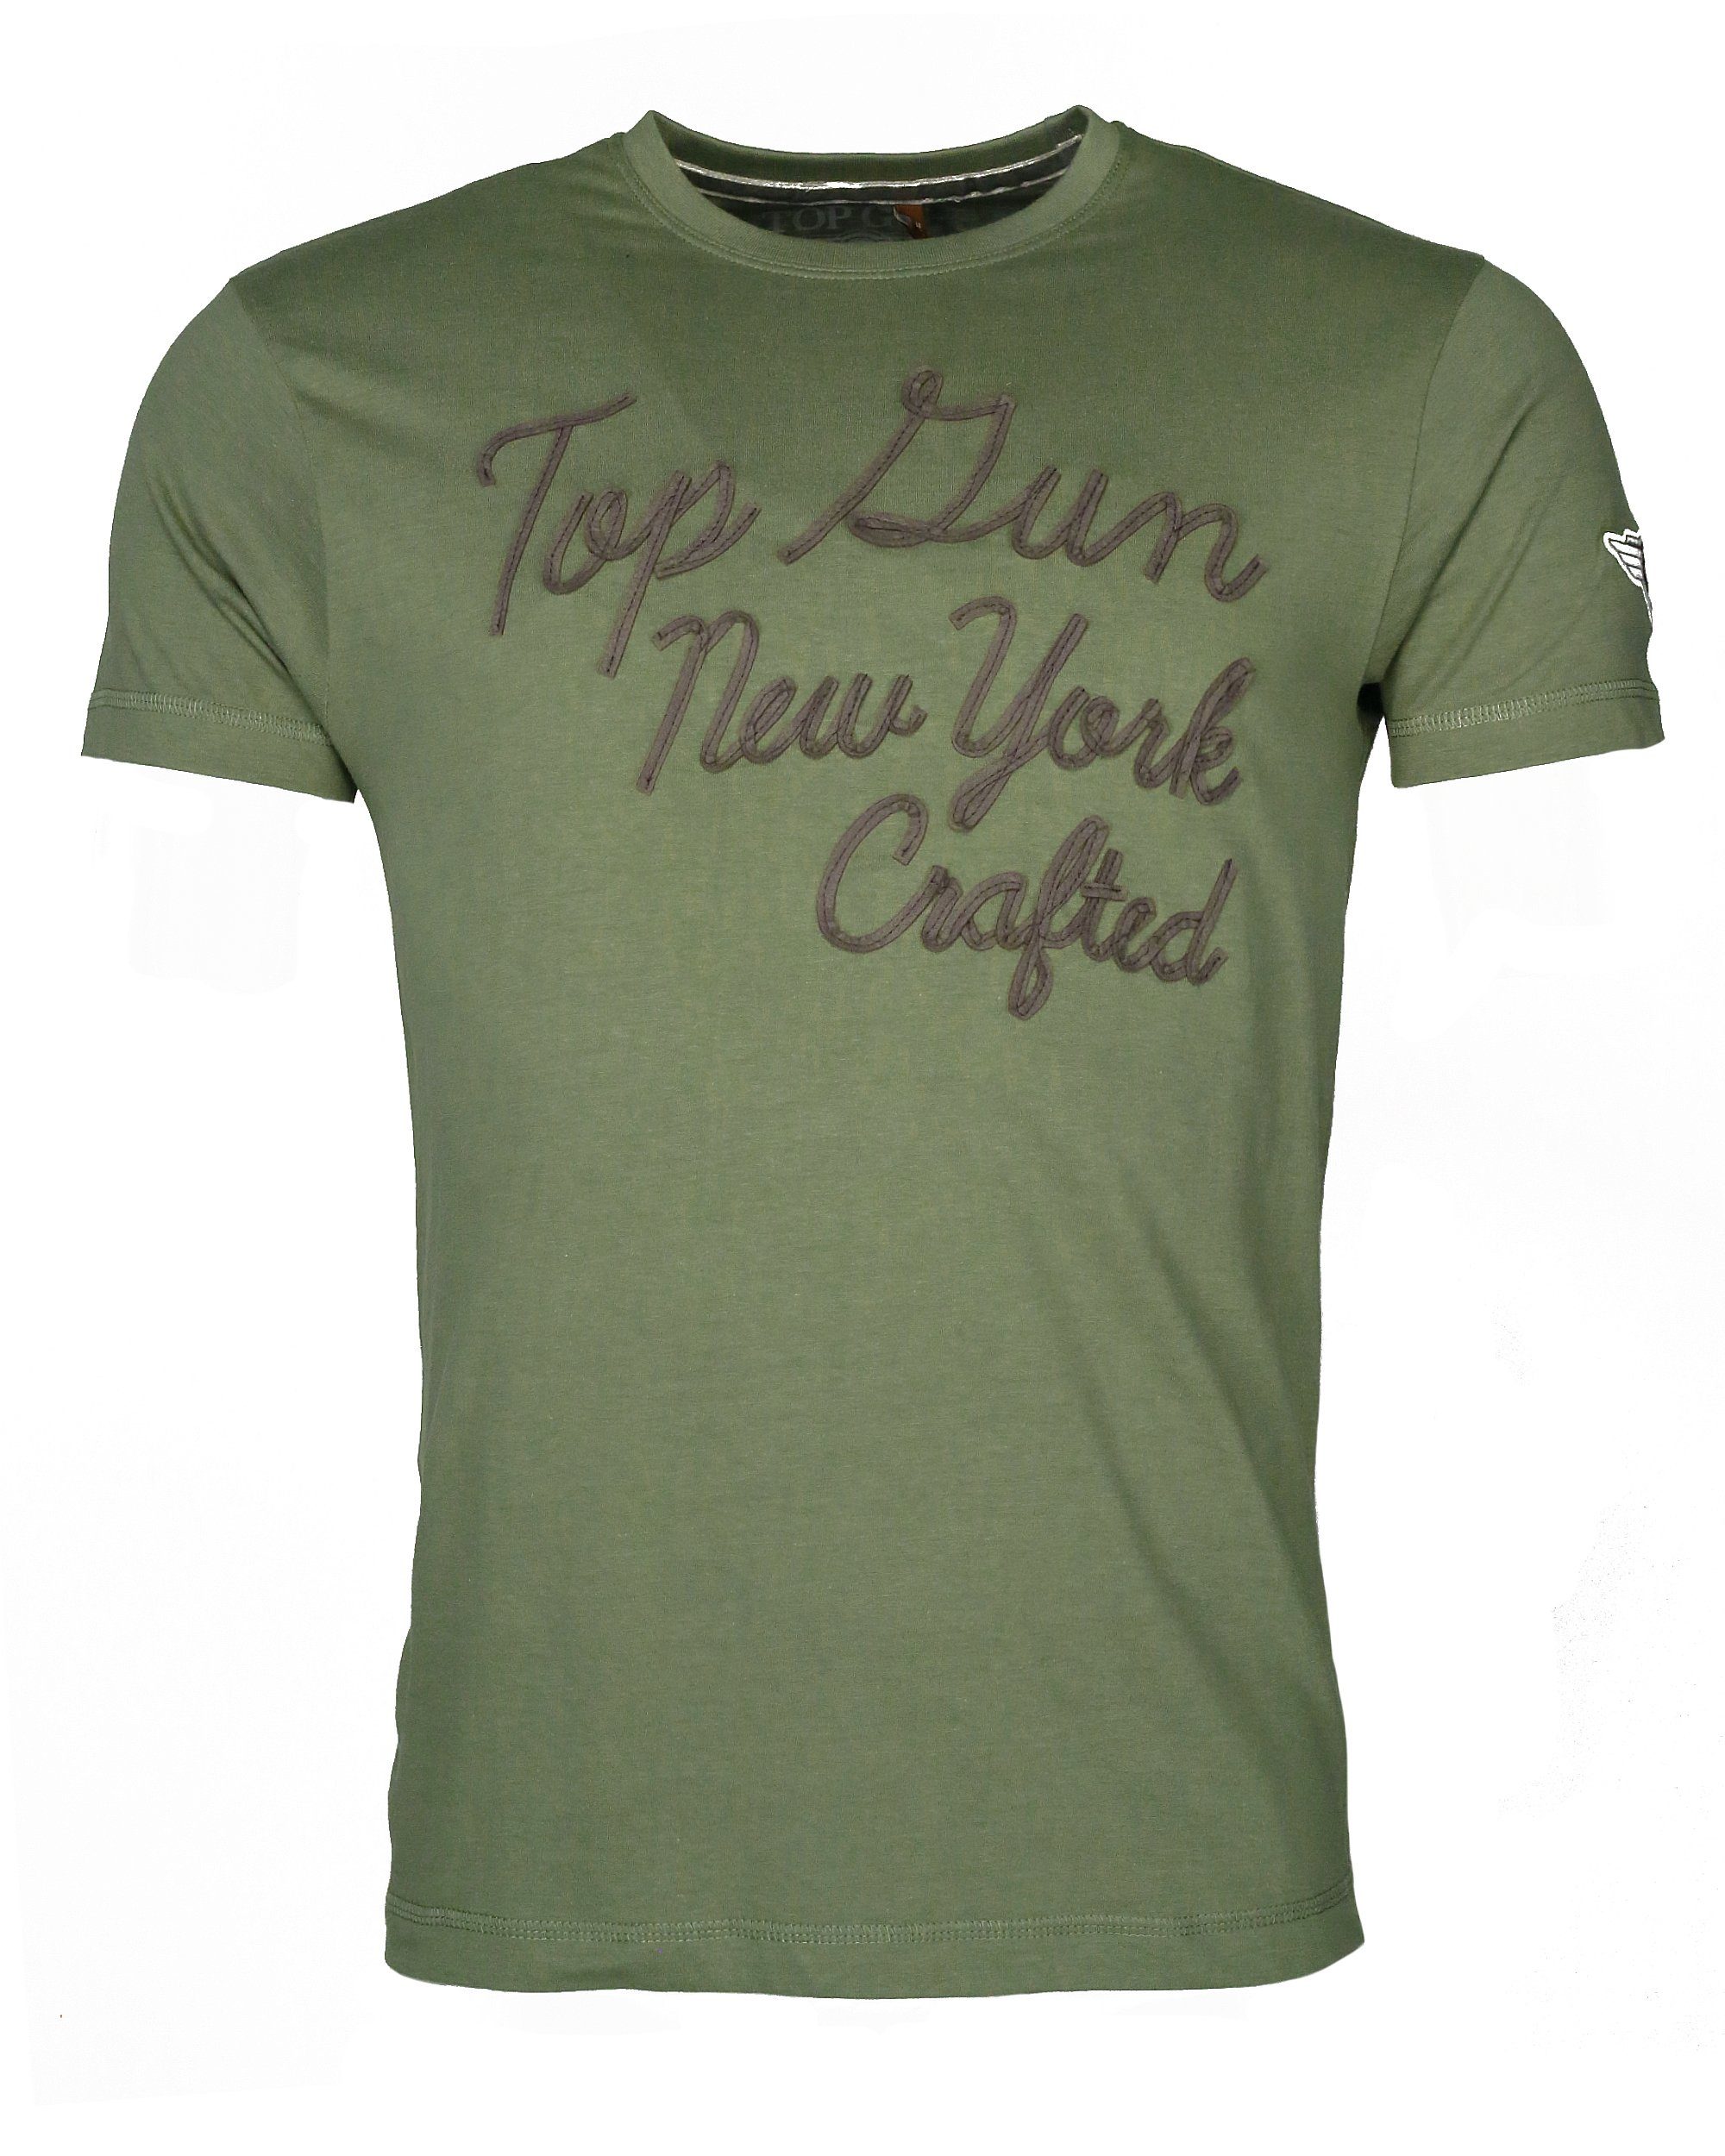 TG20191031 TOP GUN New T-Shirt York